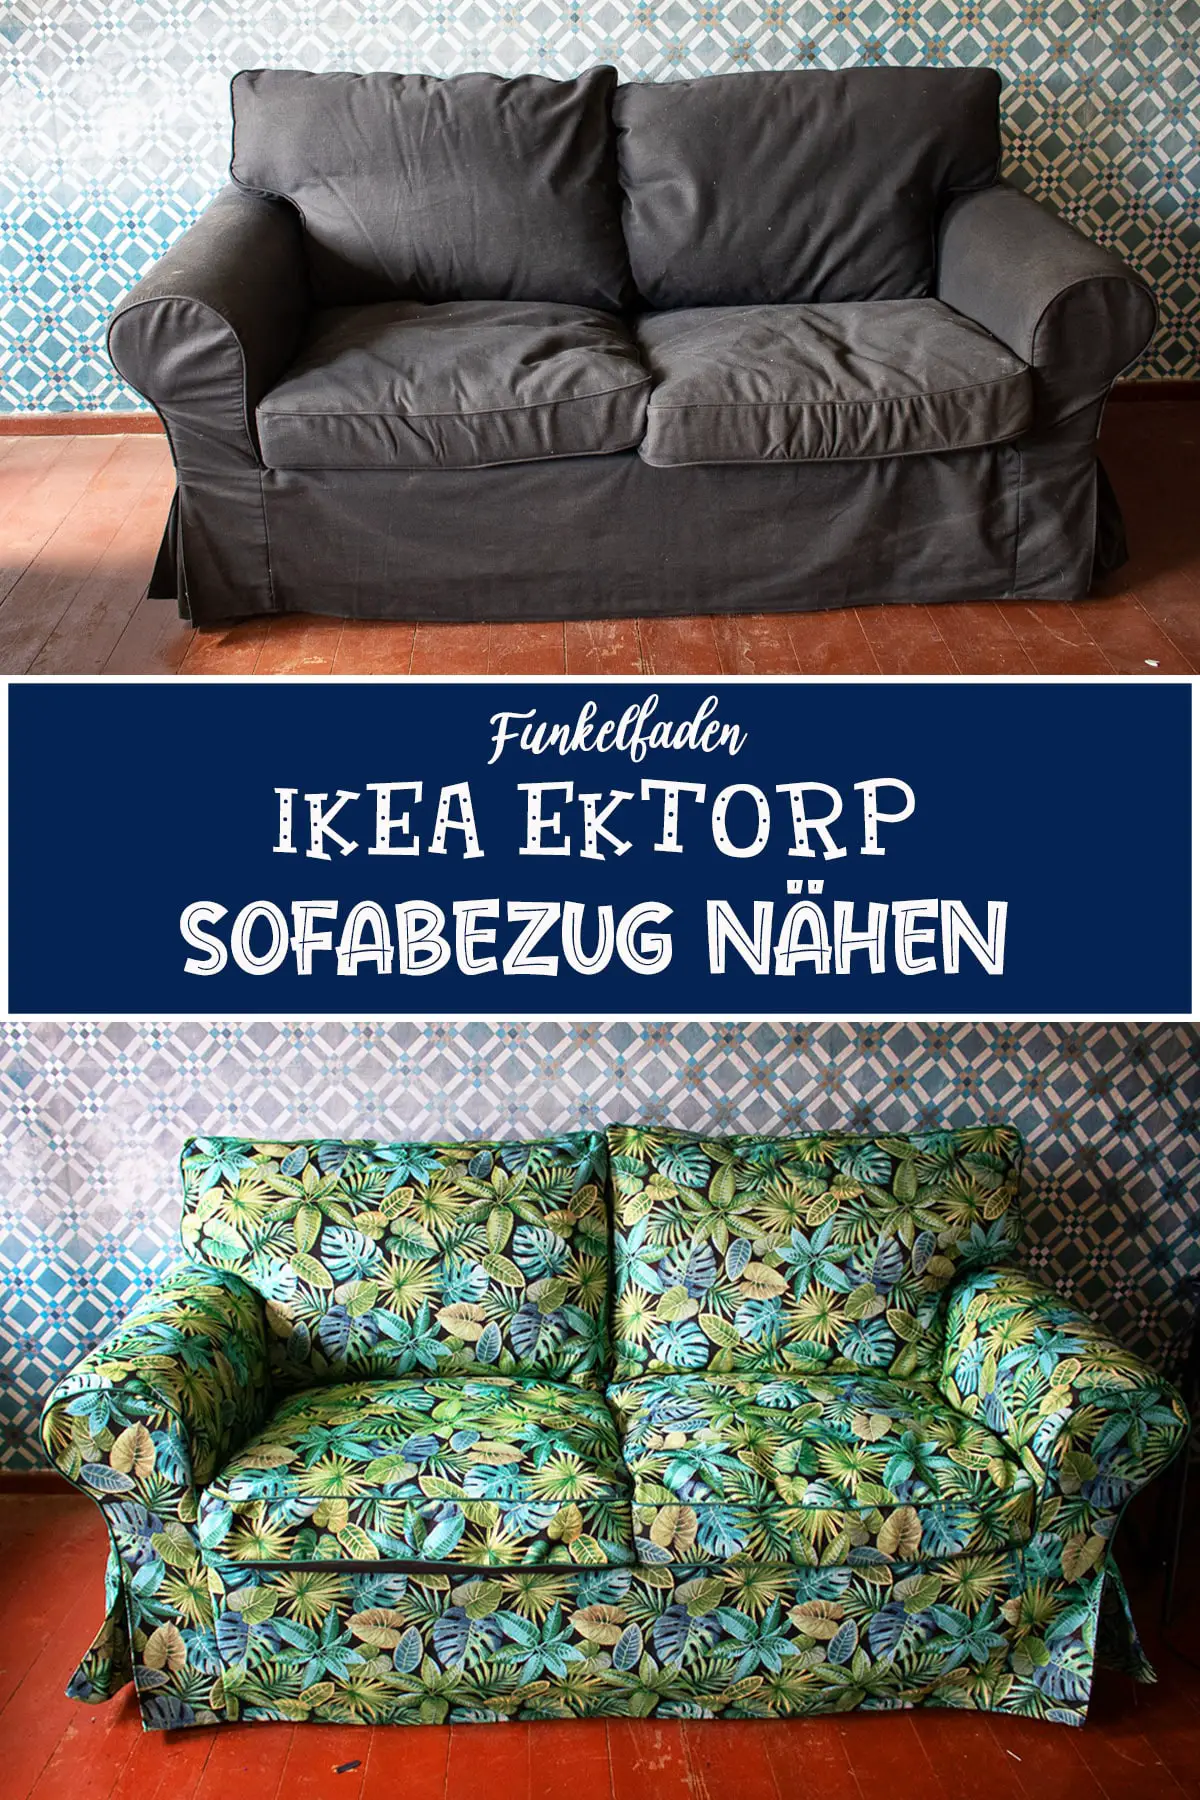 Sofa beziehen – Bezug nähen für Ikea Ektorp Sofa